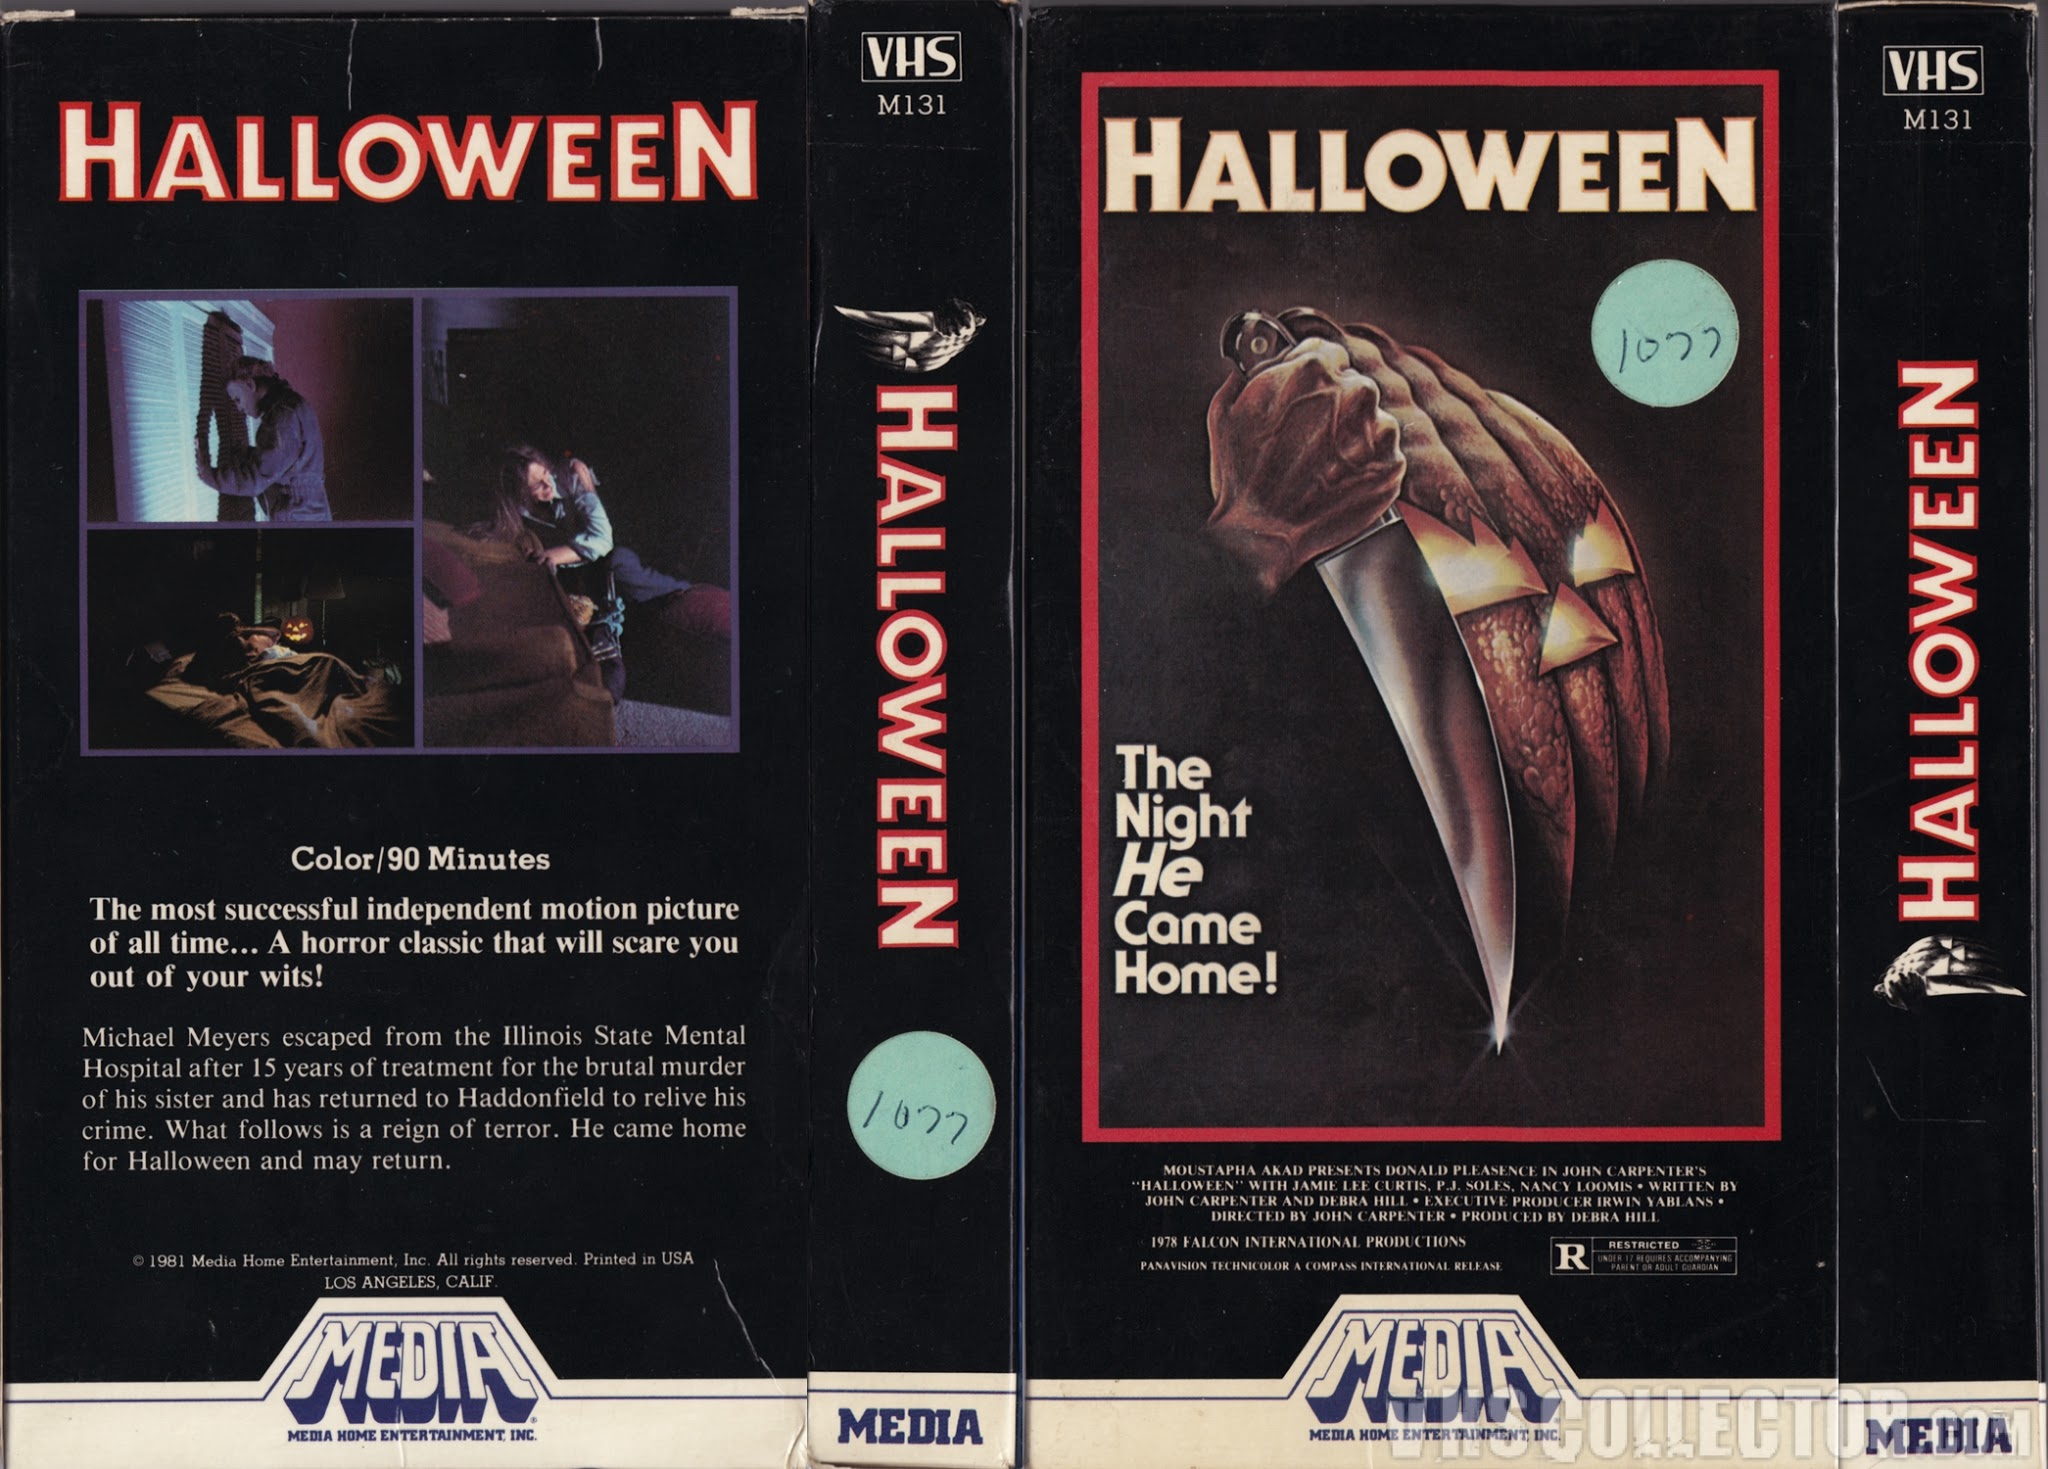 UK Media Home Entertainment 1981 VHS cover.